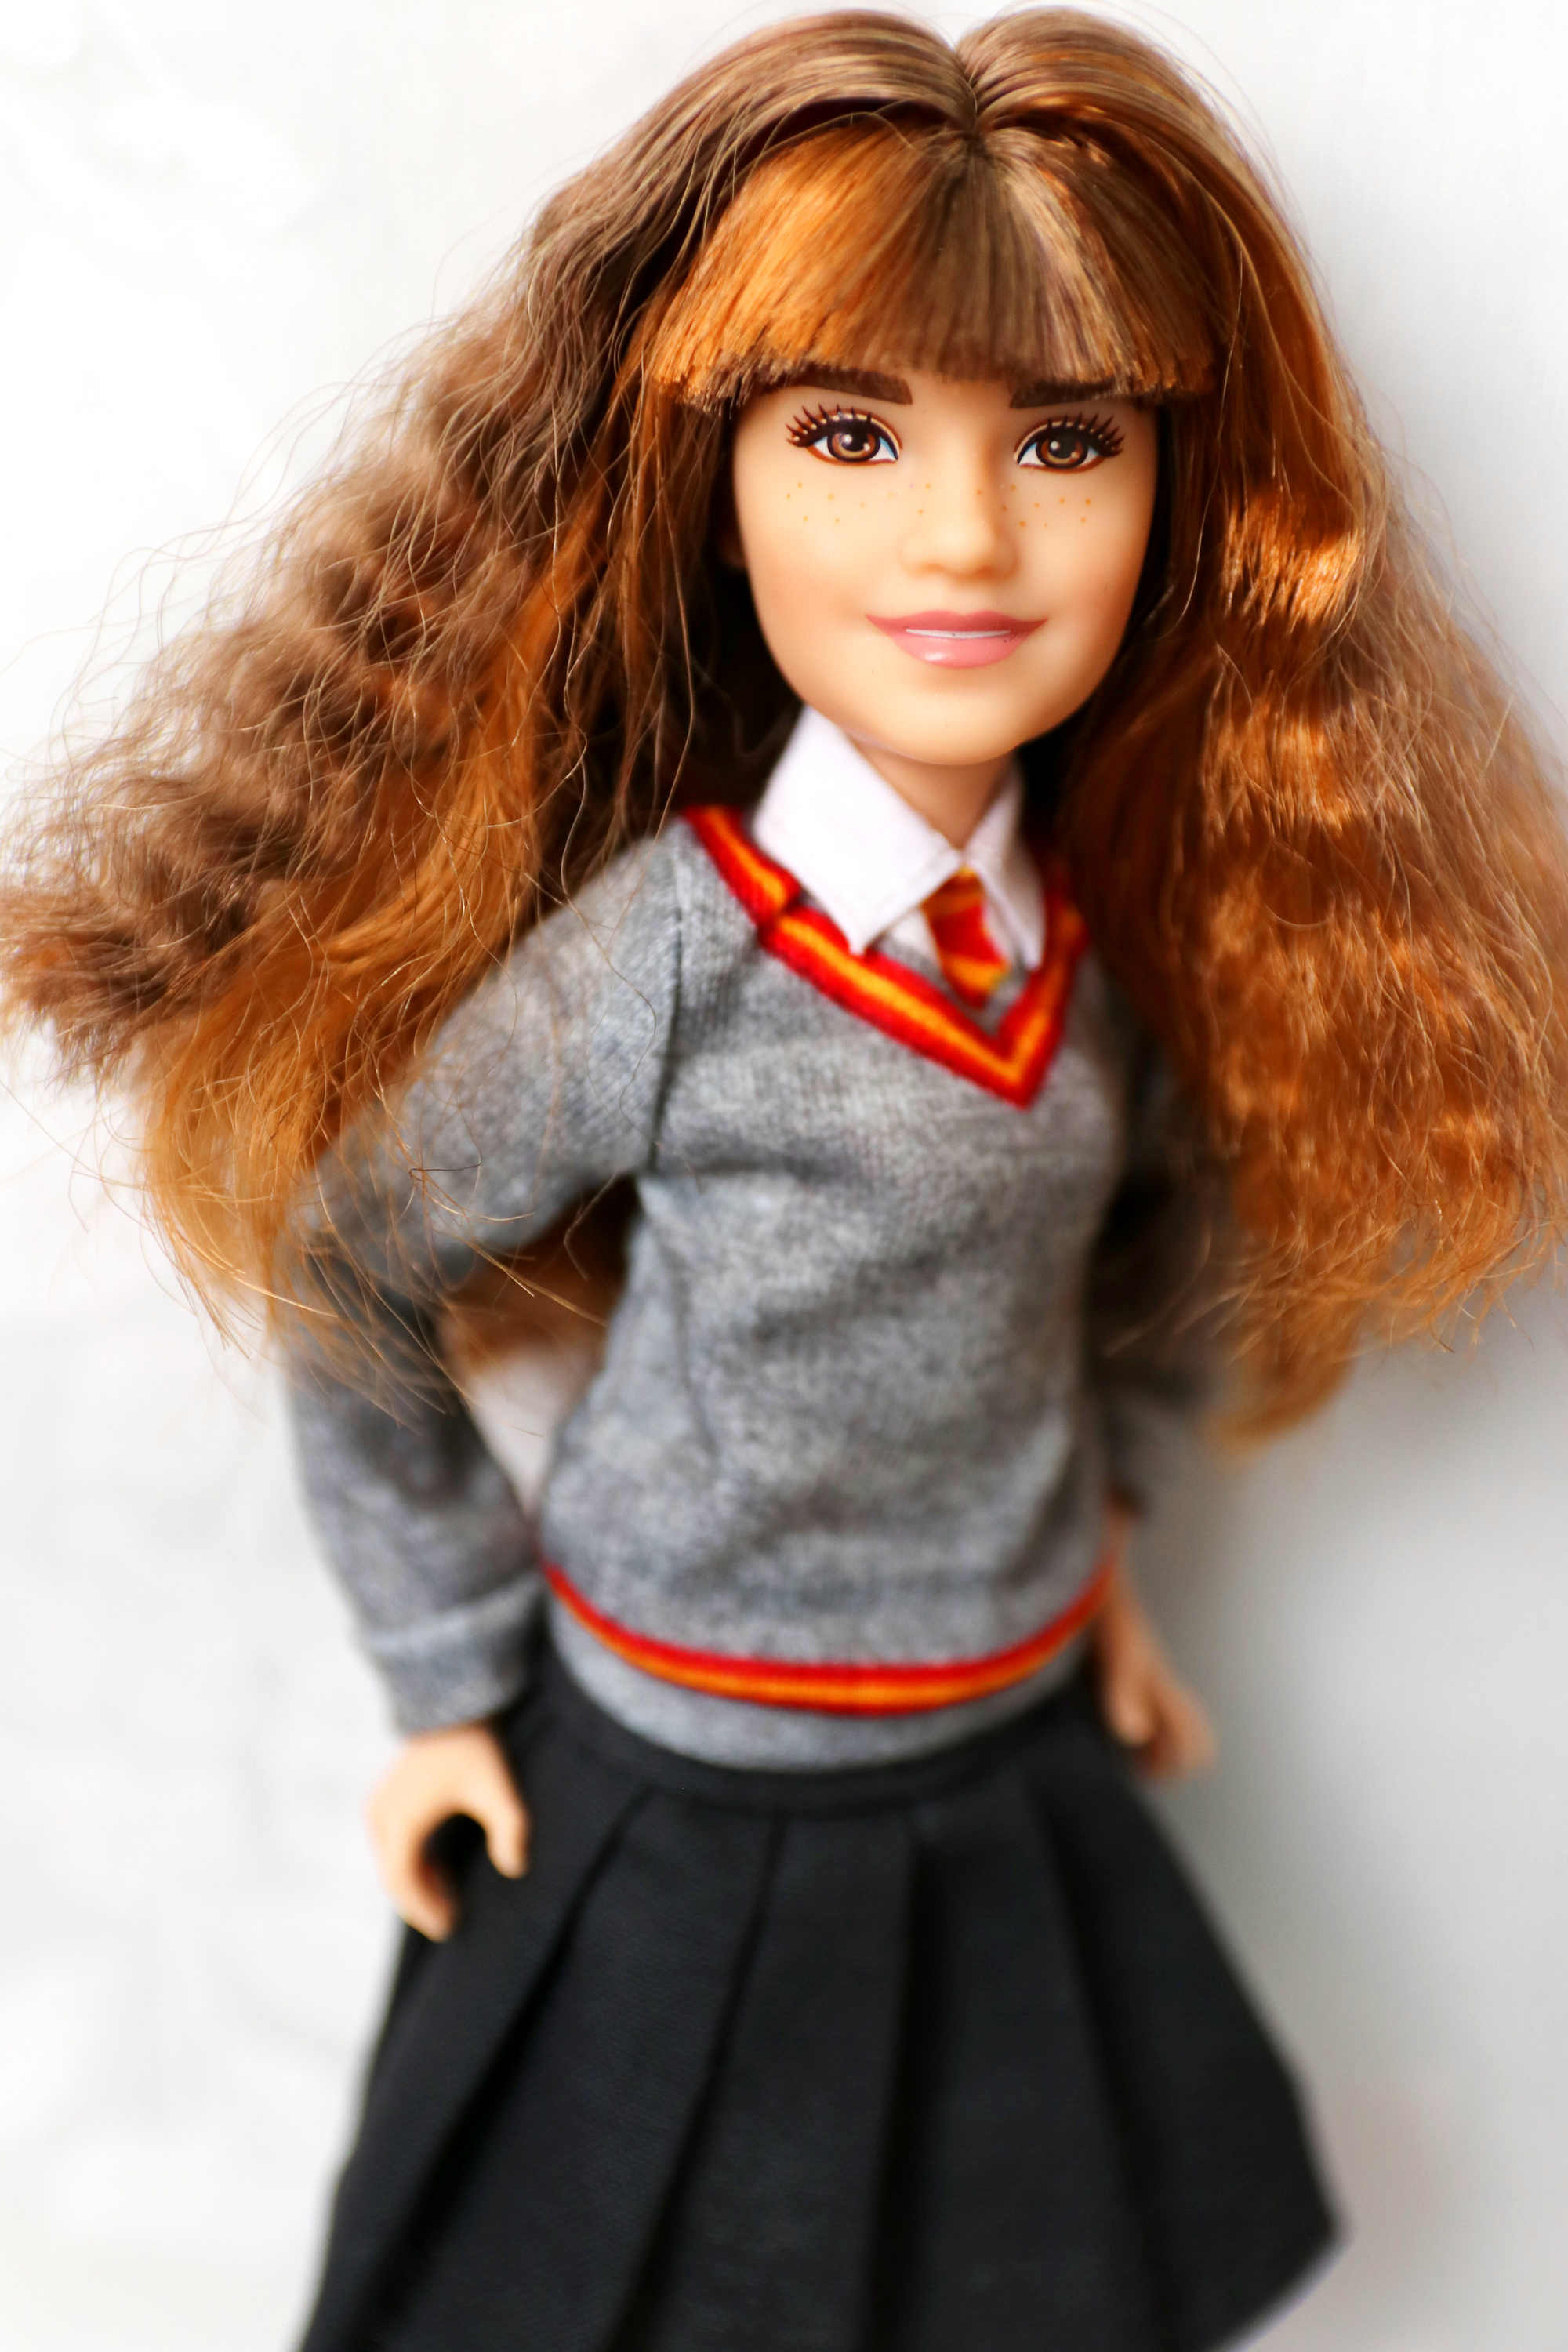 harry potter hermione doll